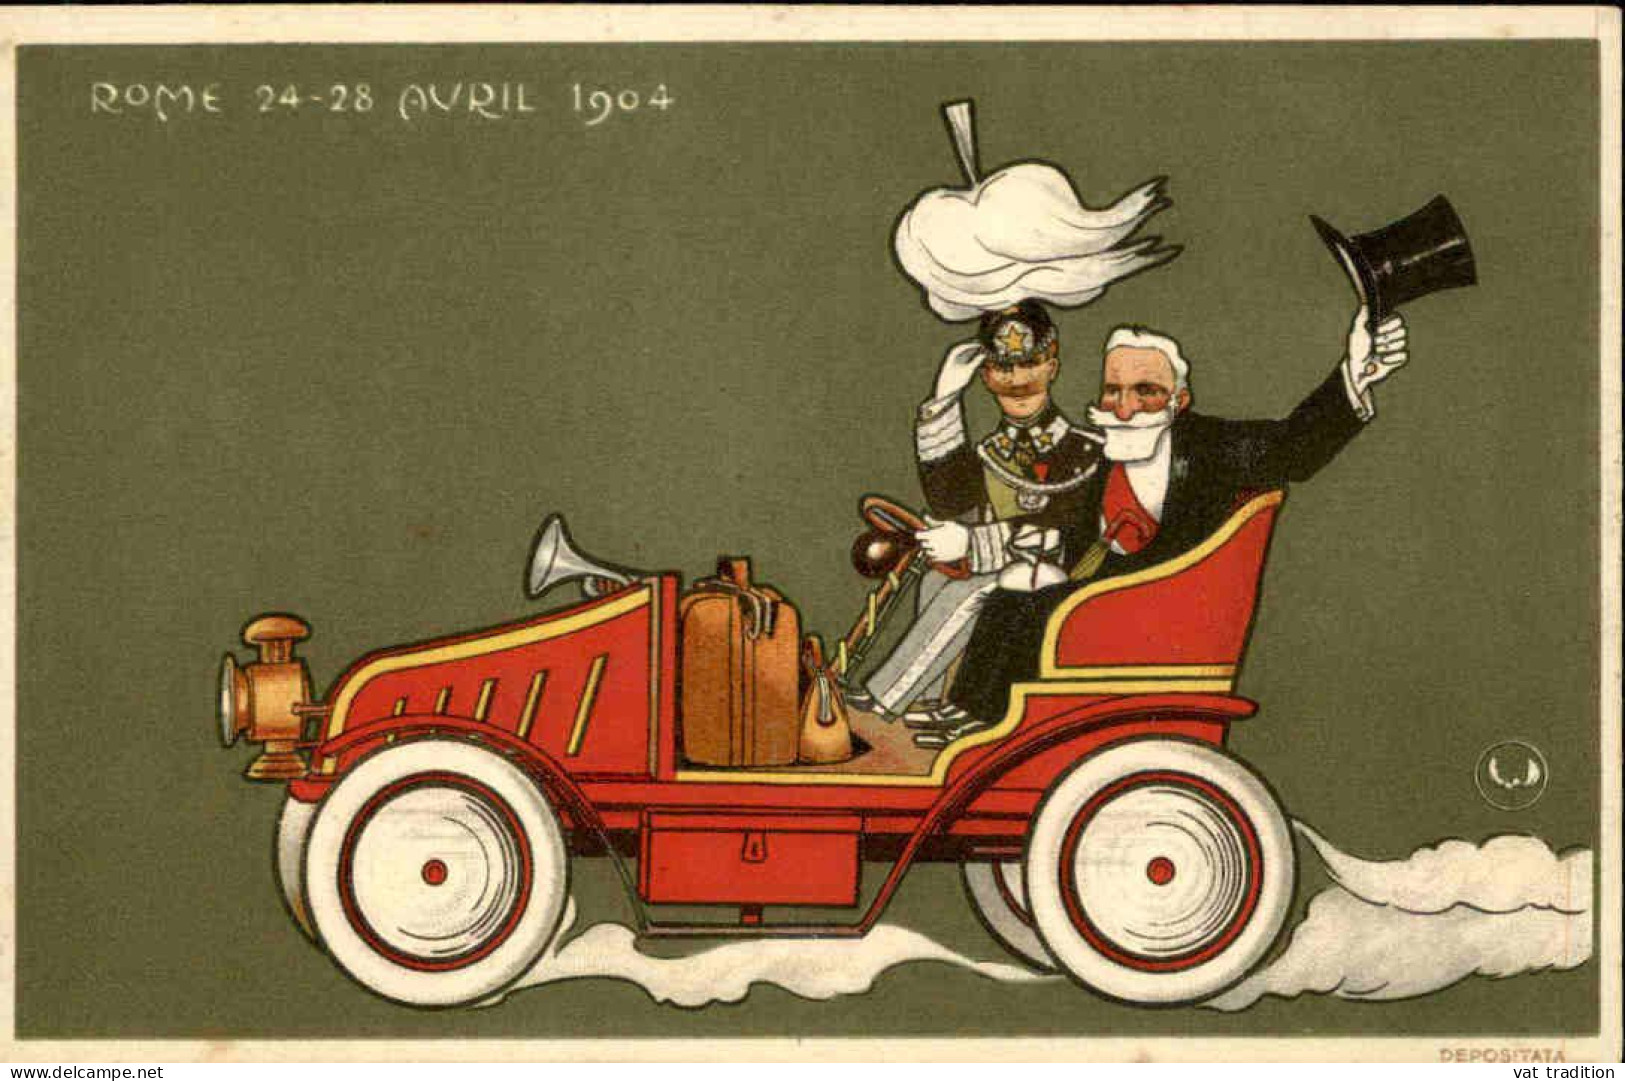 POLITIQUE - Carte Postale - Rome 24/28 Avril 1904 - L 152213 - Eventos